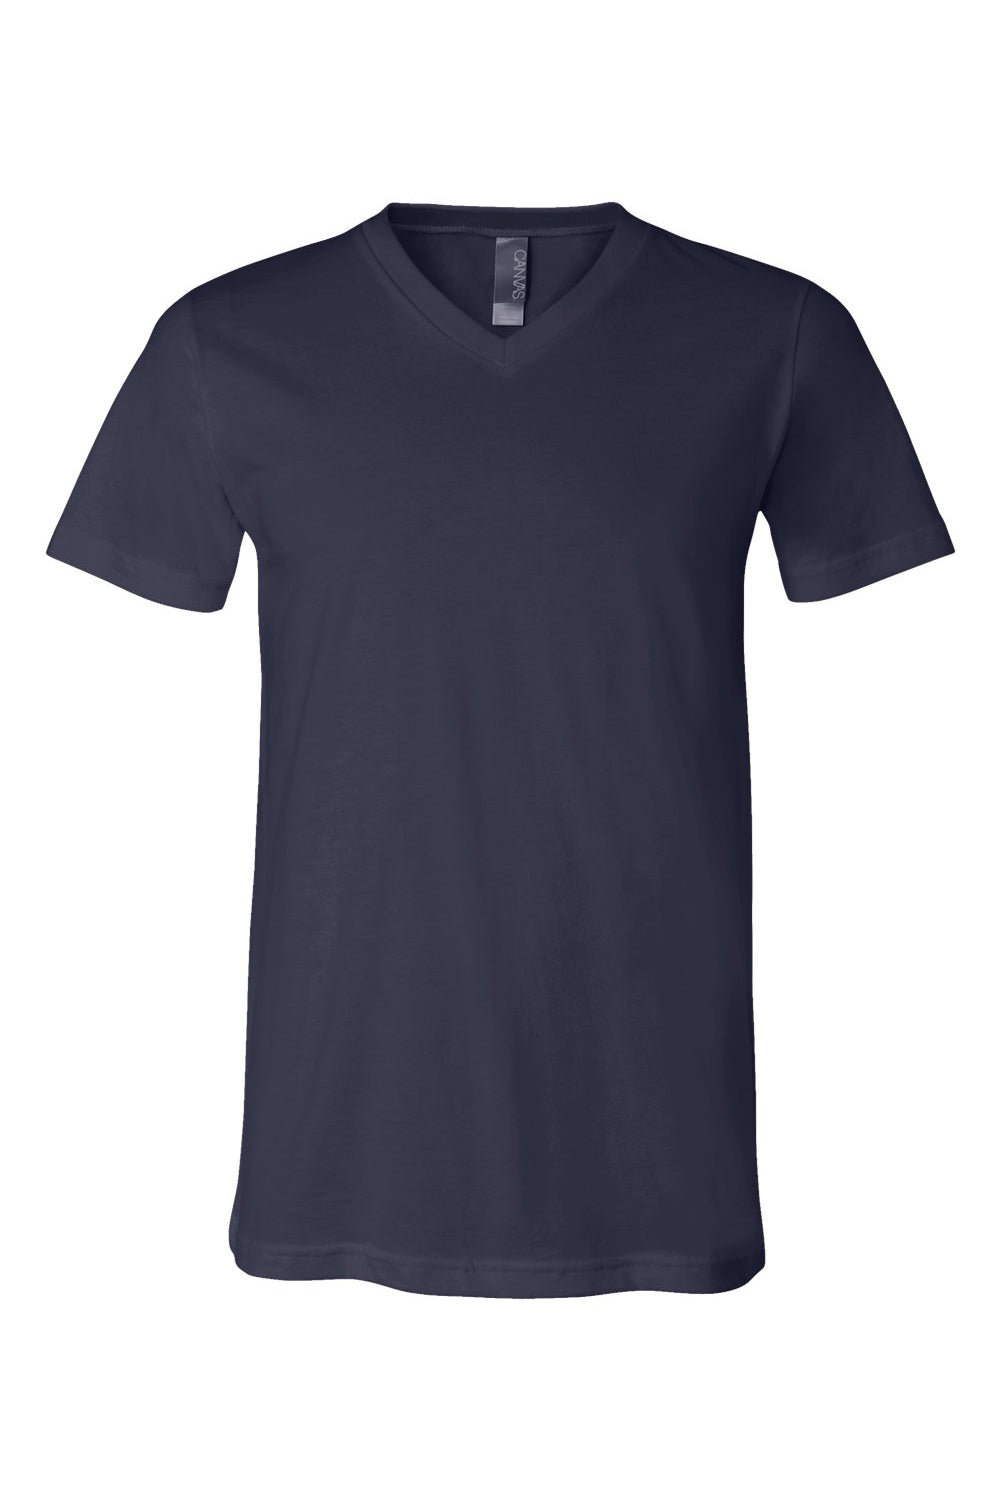 Bella + Canvas BC3005/3005/3655C Mens Jersey Short Sleeve V-Neck T-Shirt Navy Blue Flat Front